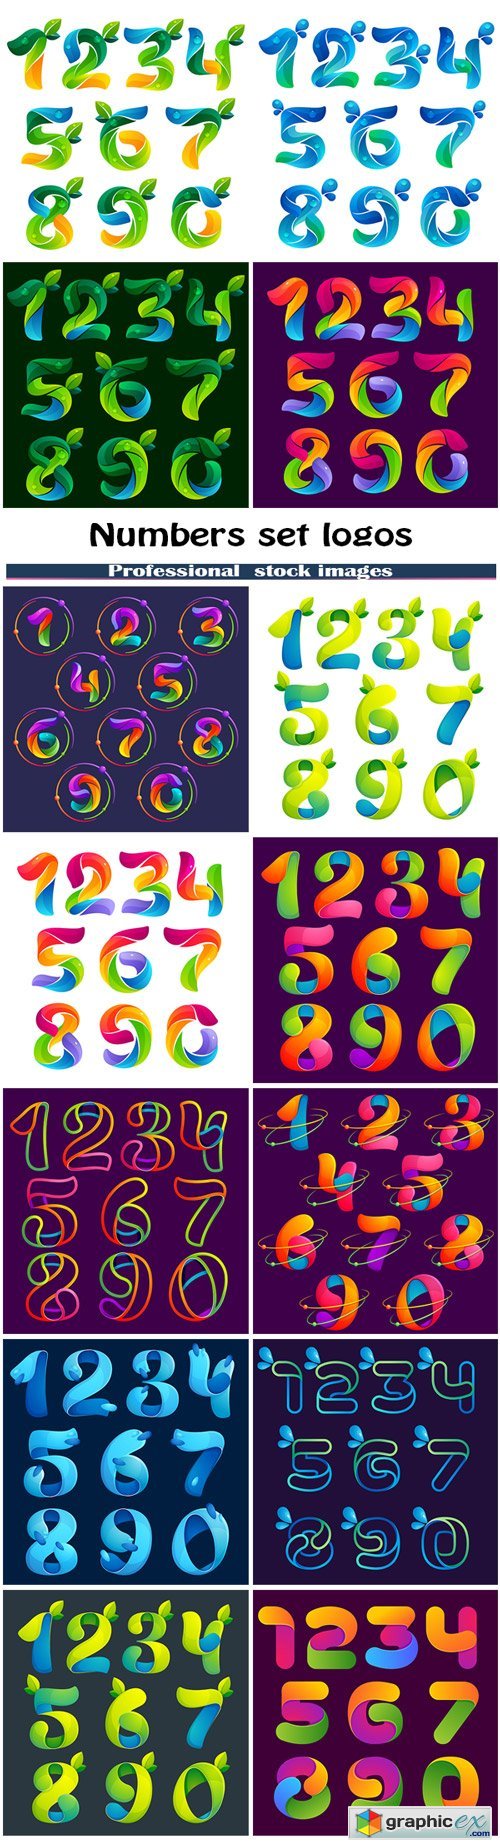 Numbers set logos